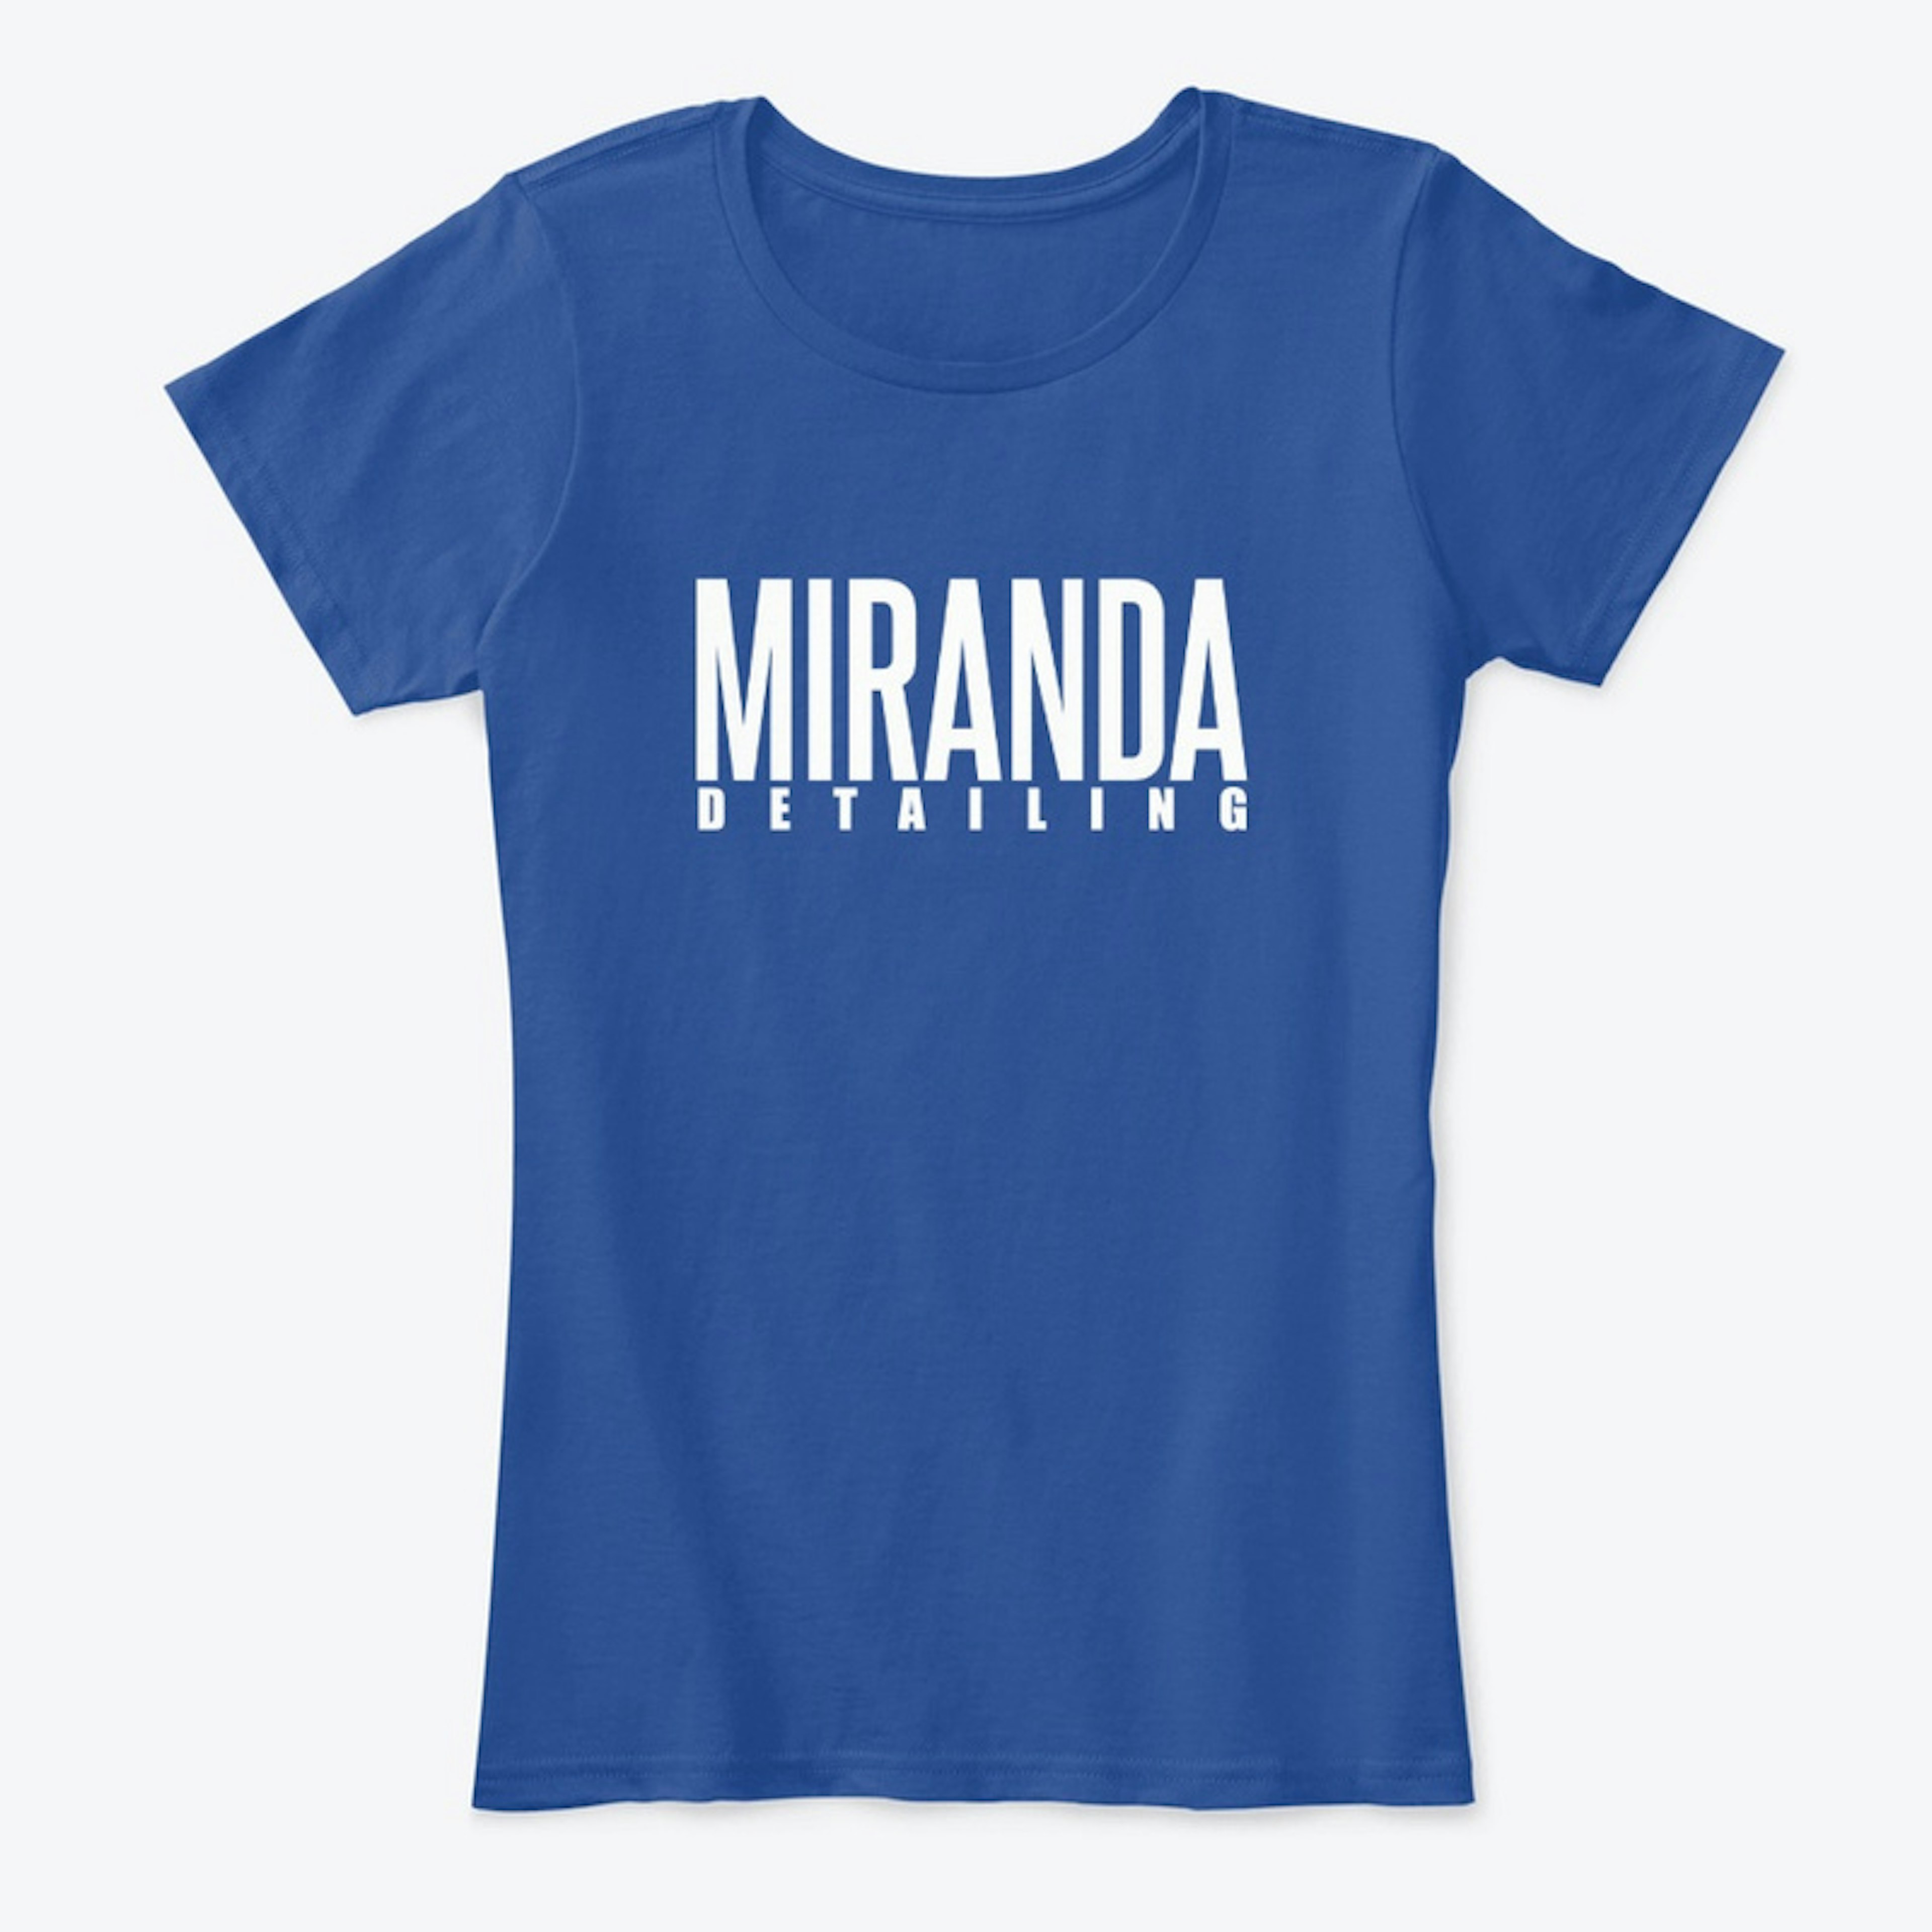 New Miranda Detailing Logo